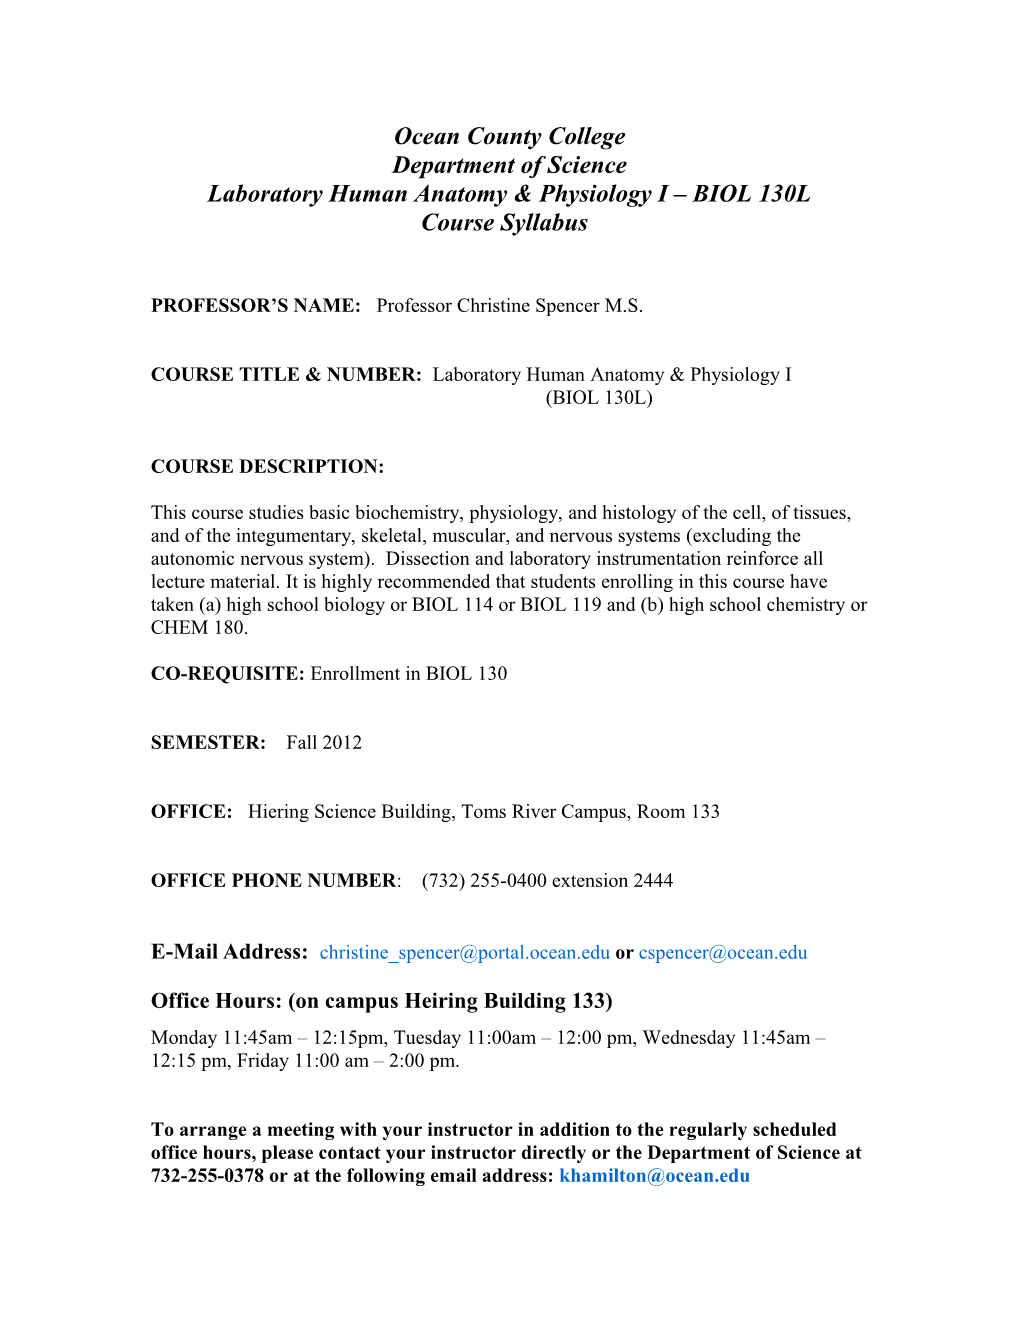 Laboratory Human Anatomy & Physiology I BIOL 130L